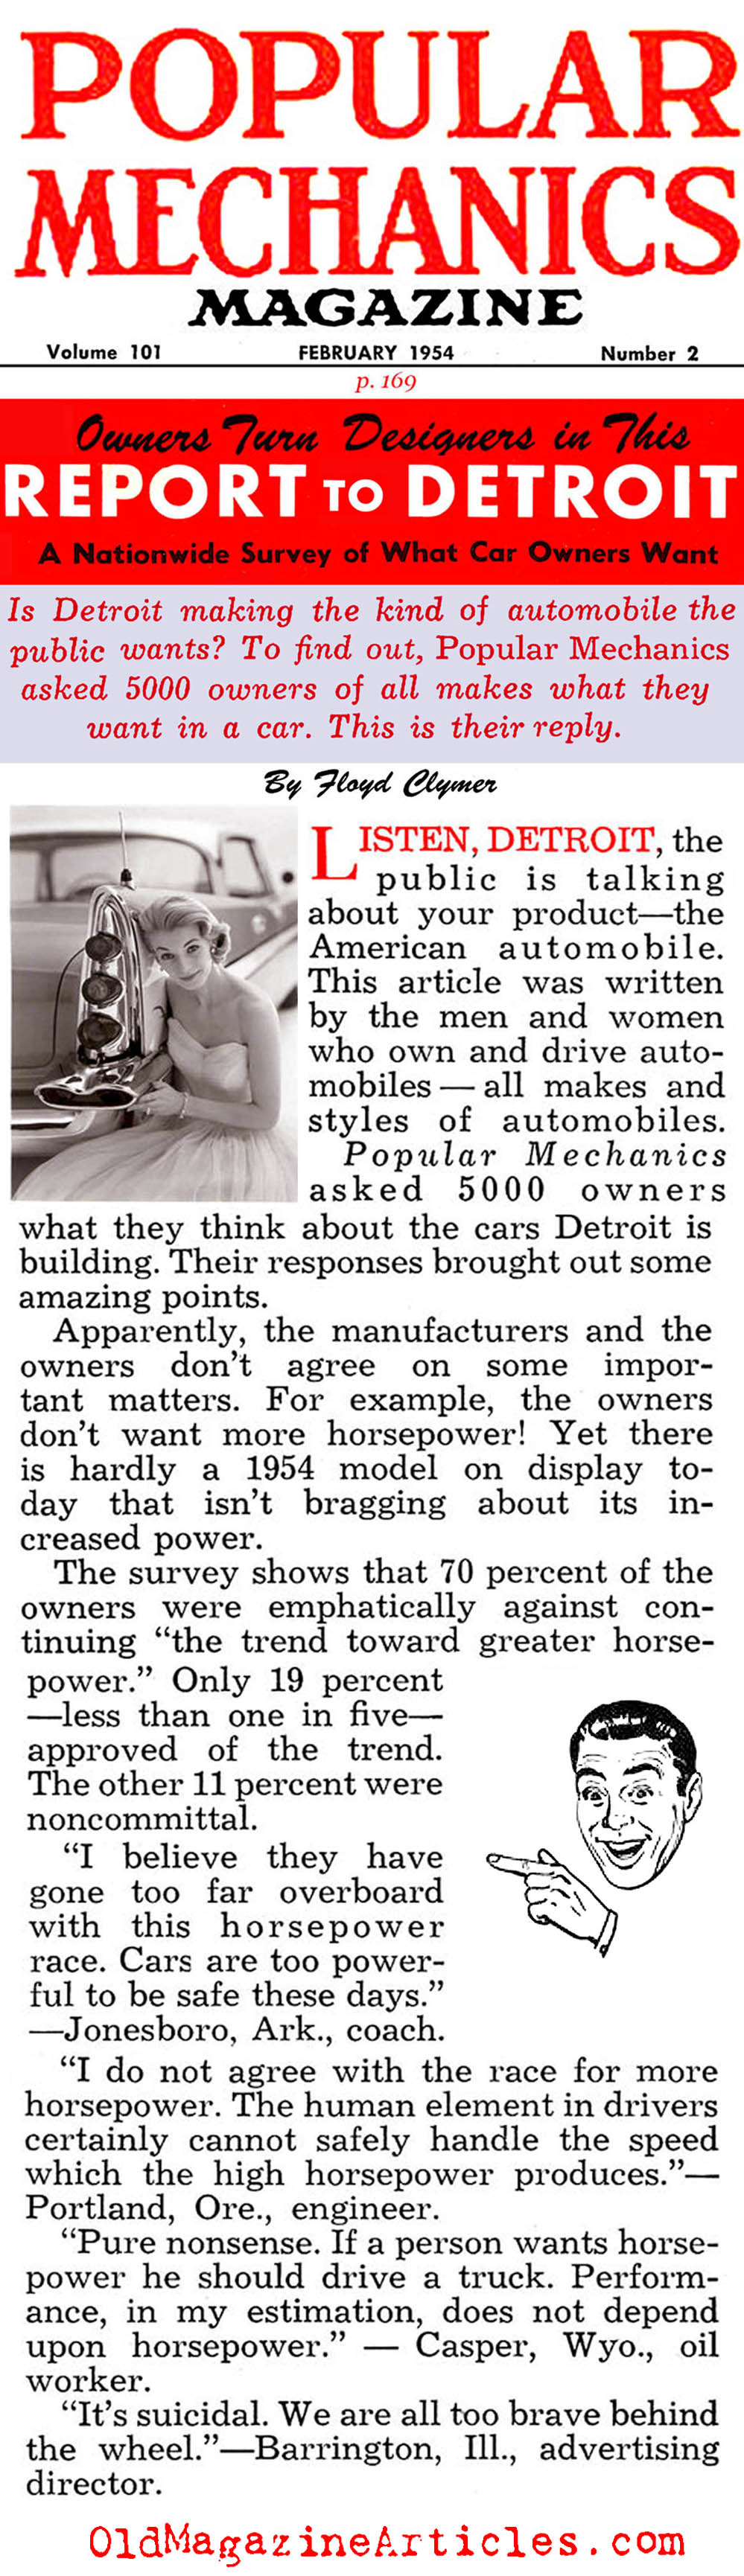 Consumers Tell it to Detroit (Popular Mechanics, 1954)